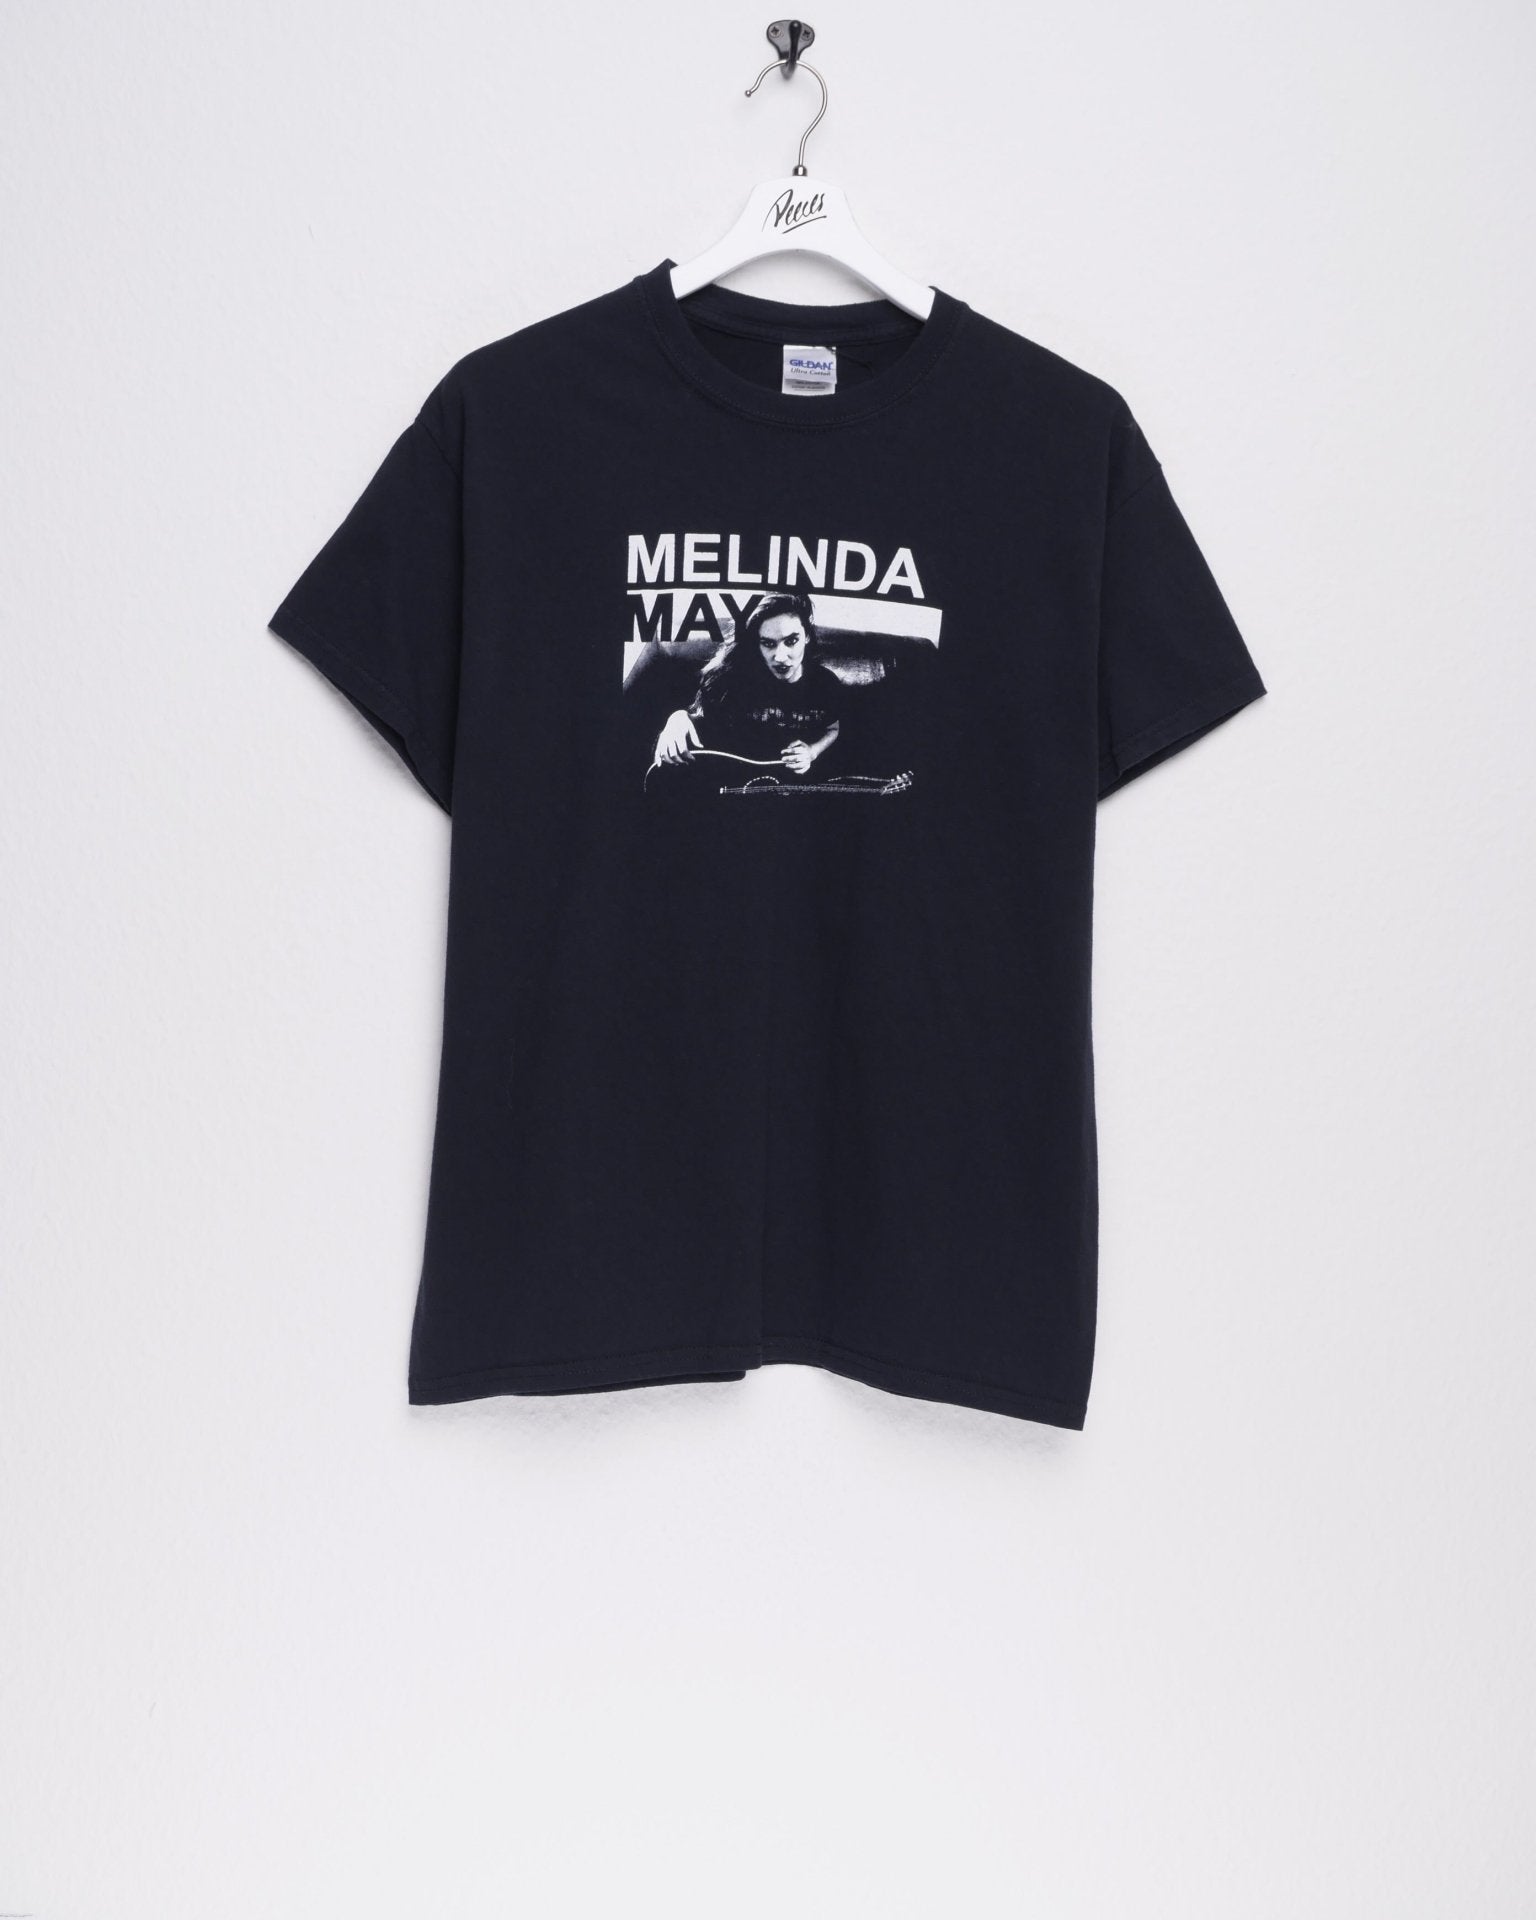 Melinda May printed Graphic Vintage Shirt - Peeces